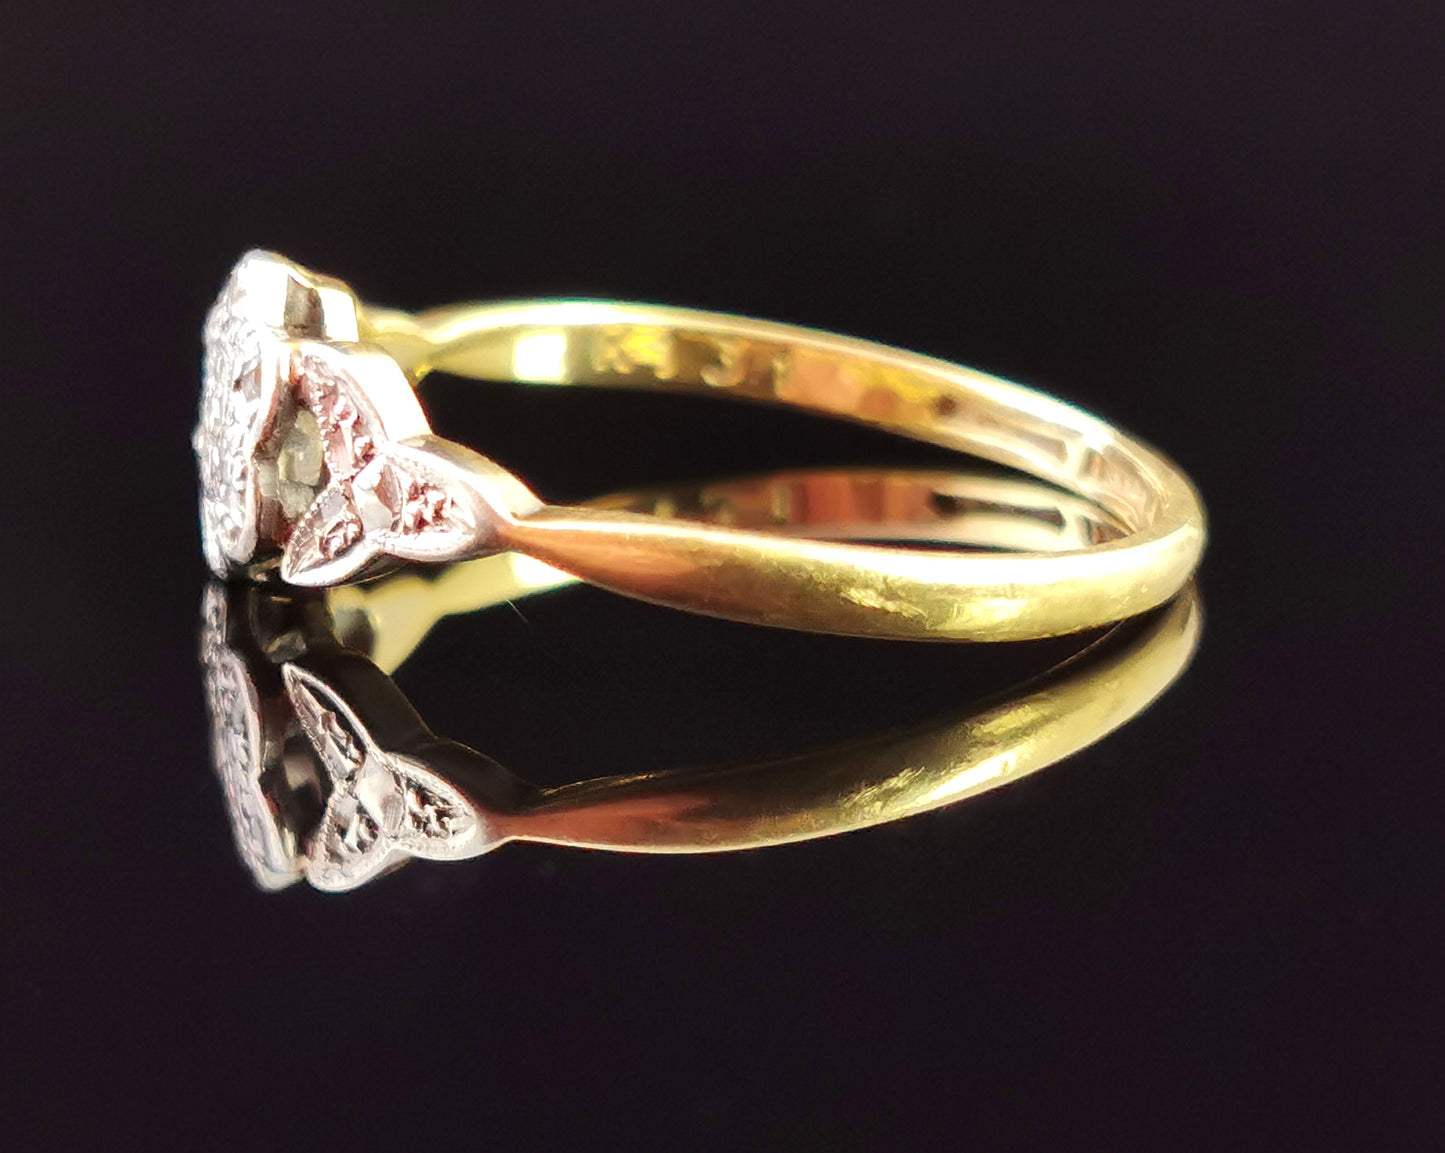 Antique diamond flower ring, 18ct gold and platinum